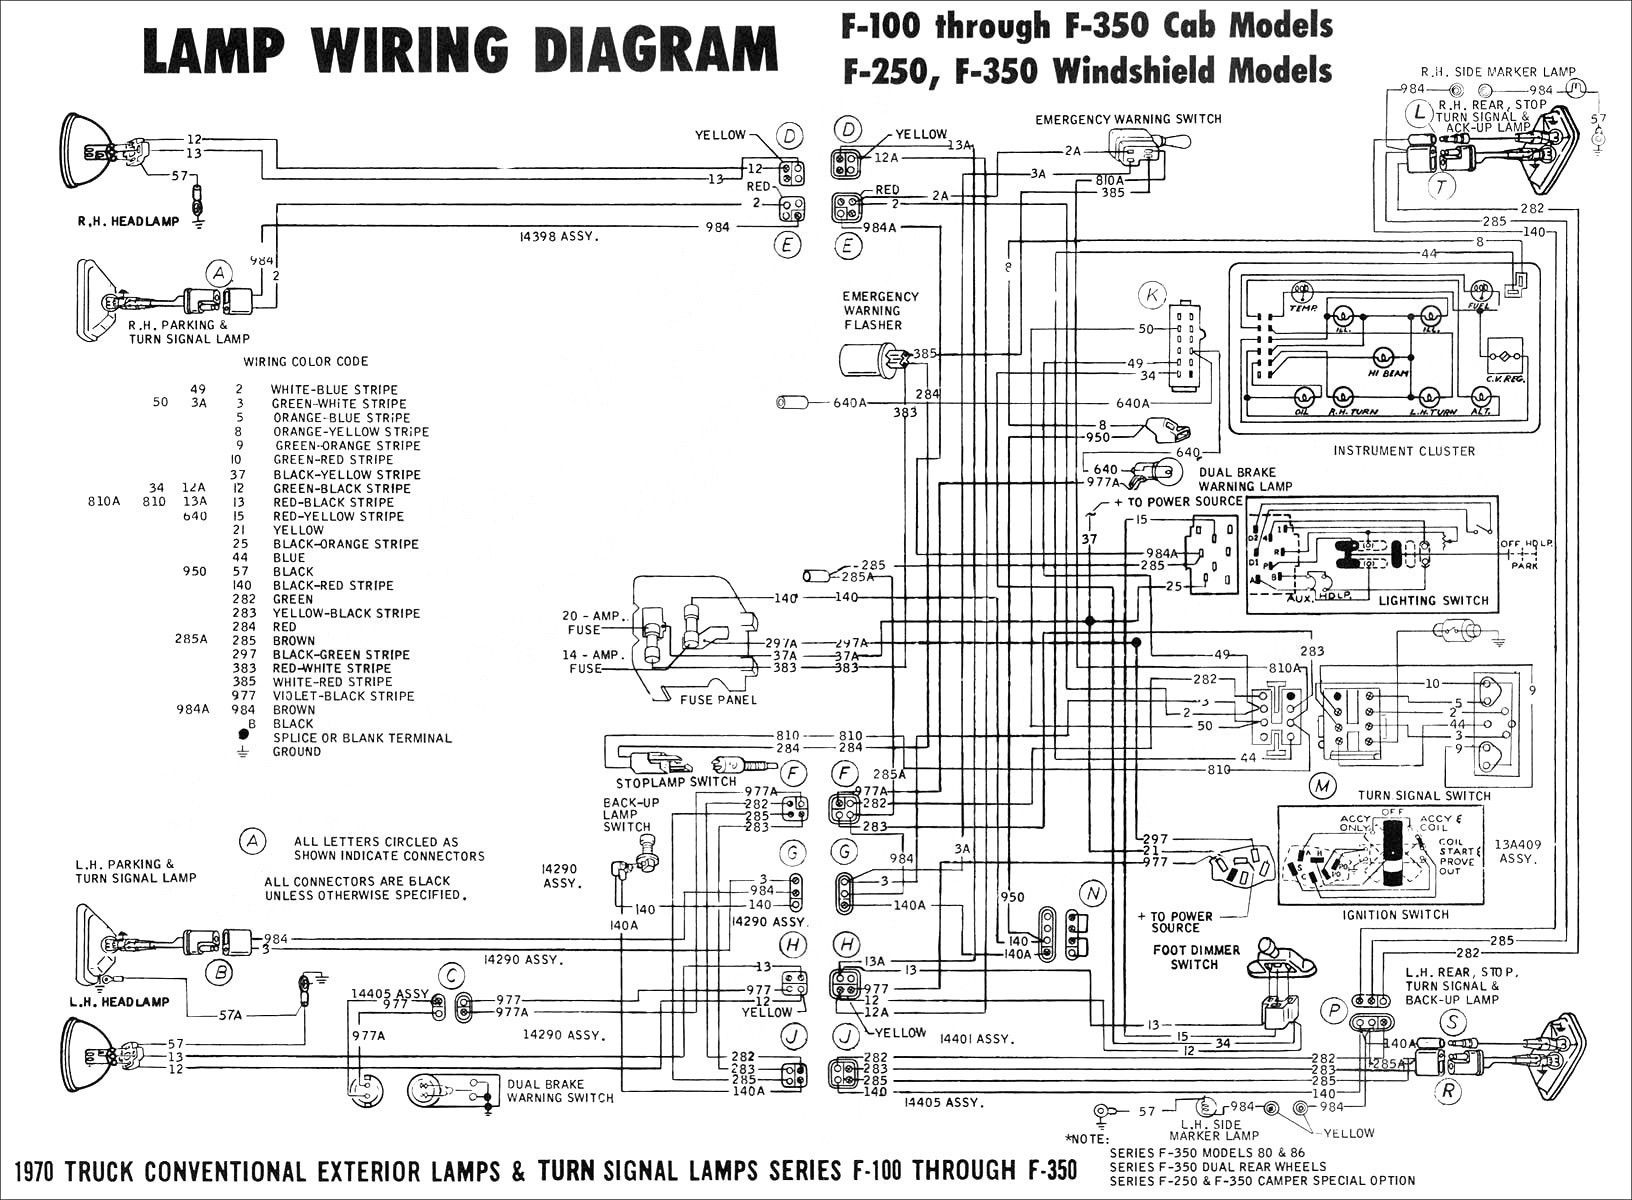 1995 Gmc Sierra Wiring Diagram 1980 Gmc Wiring Diagram Data Schematics Wiring Diagram • Of 1995 Gmc Sierra Wiring Diagram